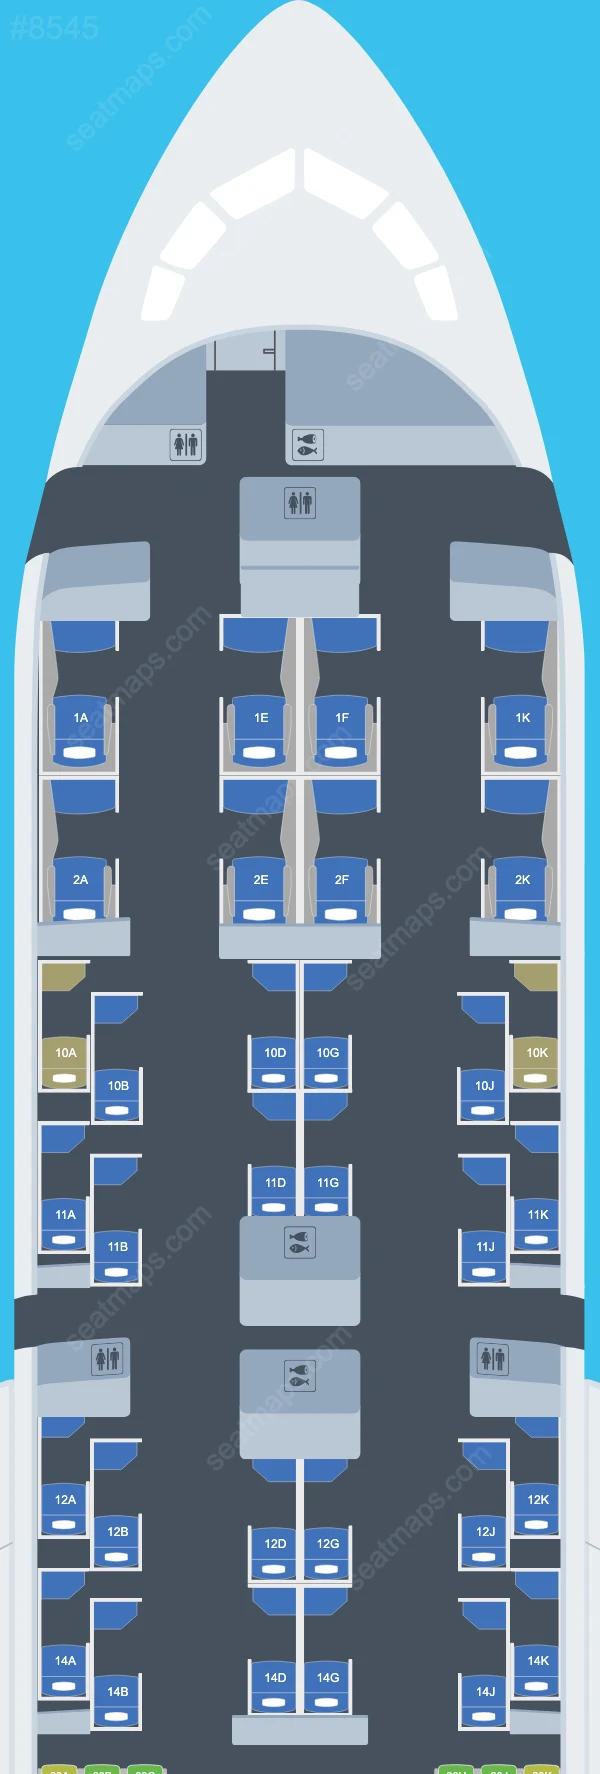 Oman Air Boeing 787 Seat Maps 787-9 V.2